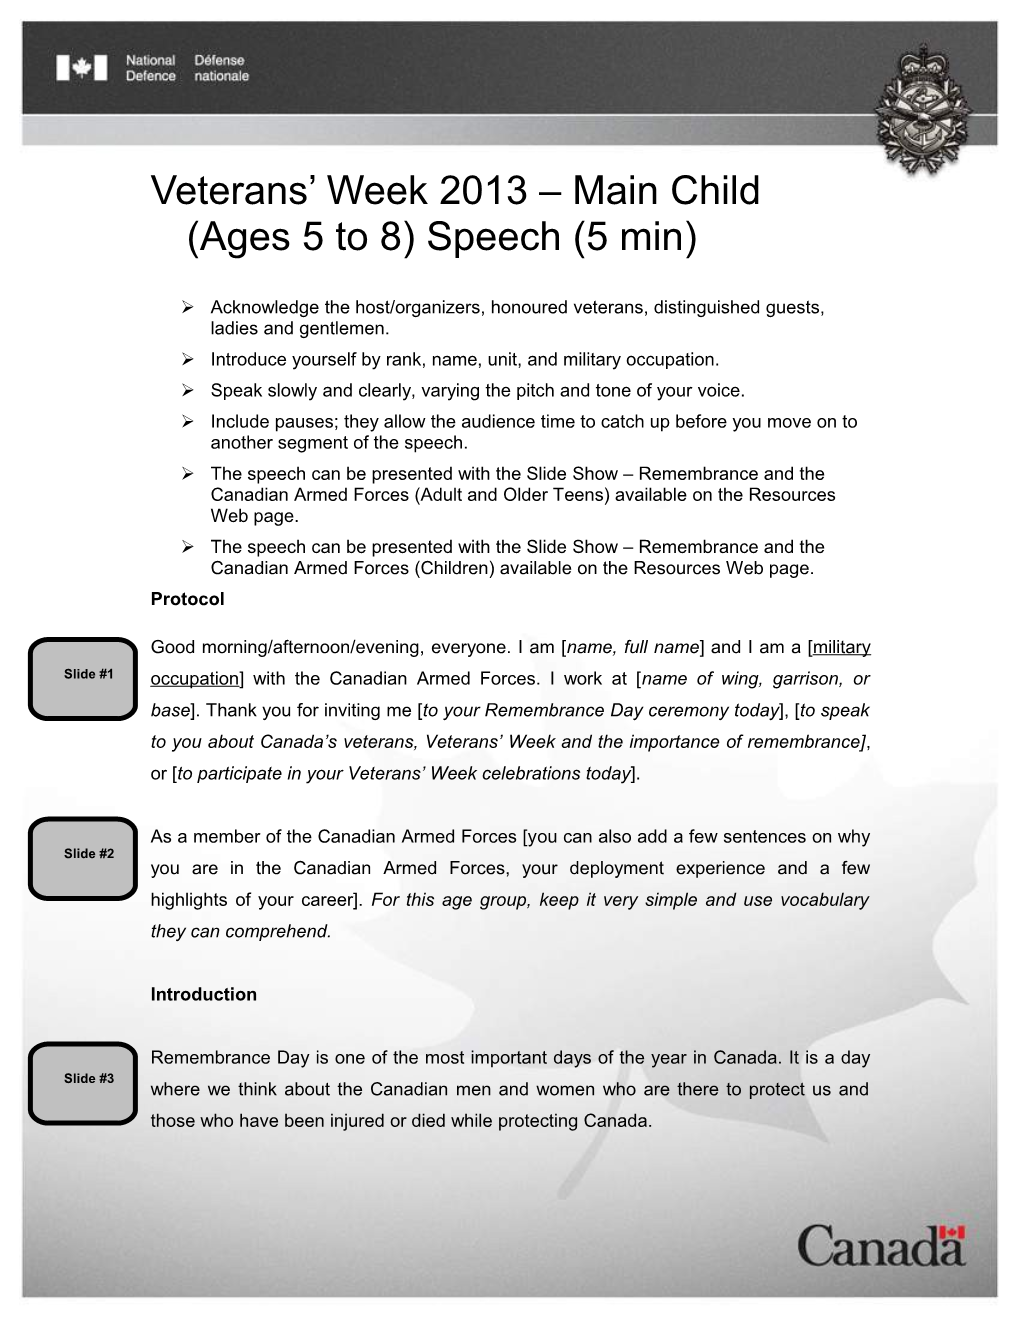 Veterans Week 2013 Main Child (Ages 5 to 8) Speech(5 Min)